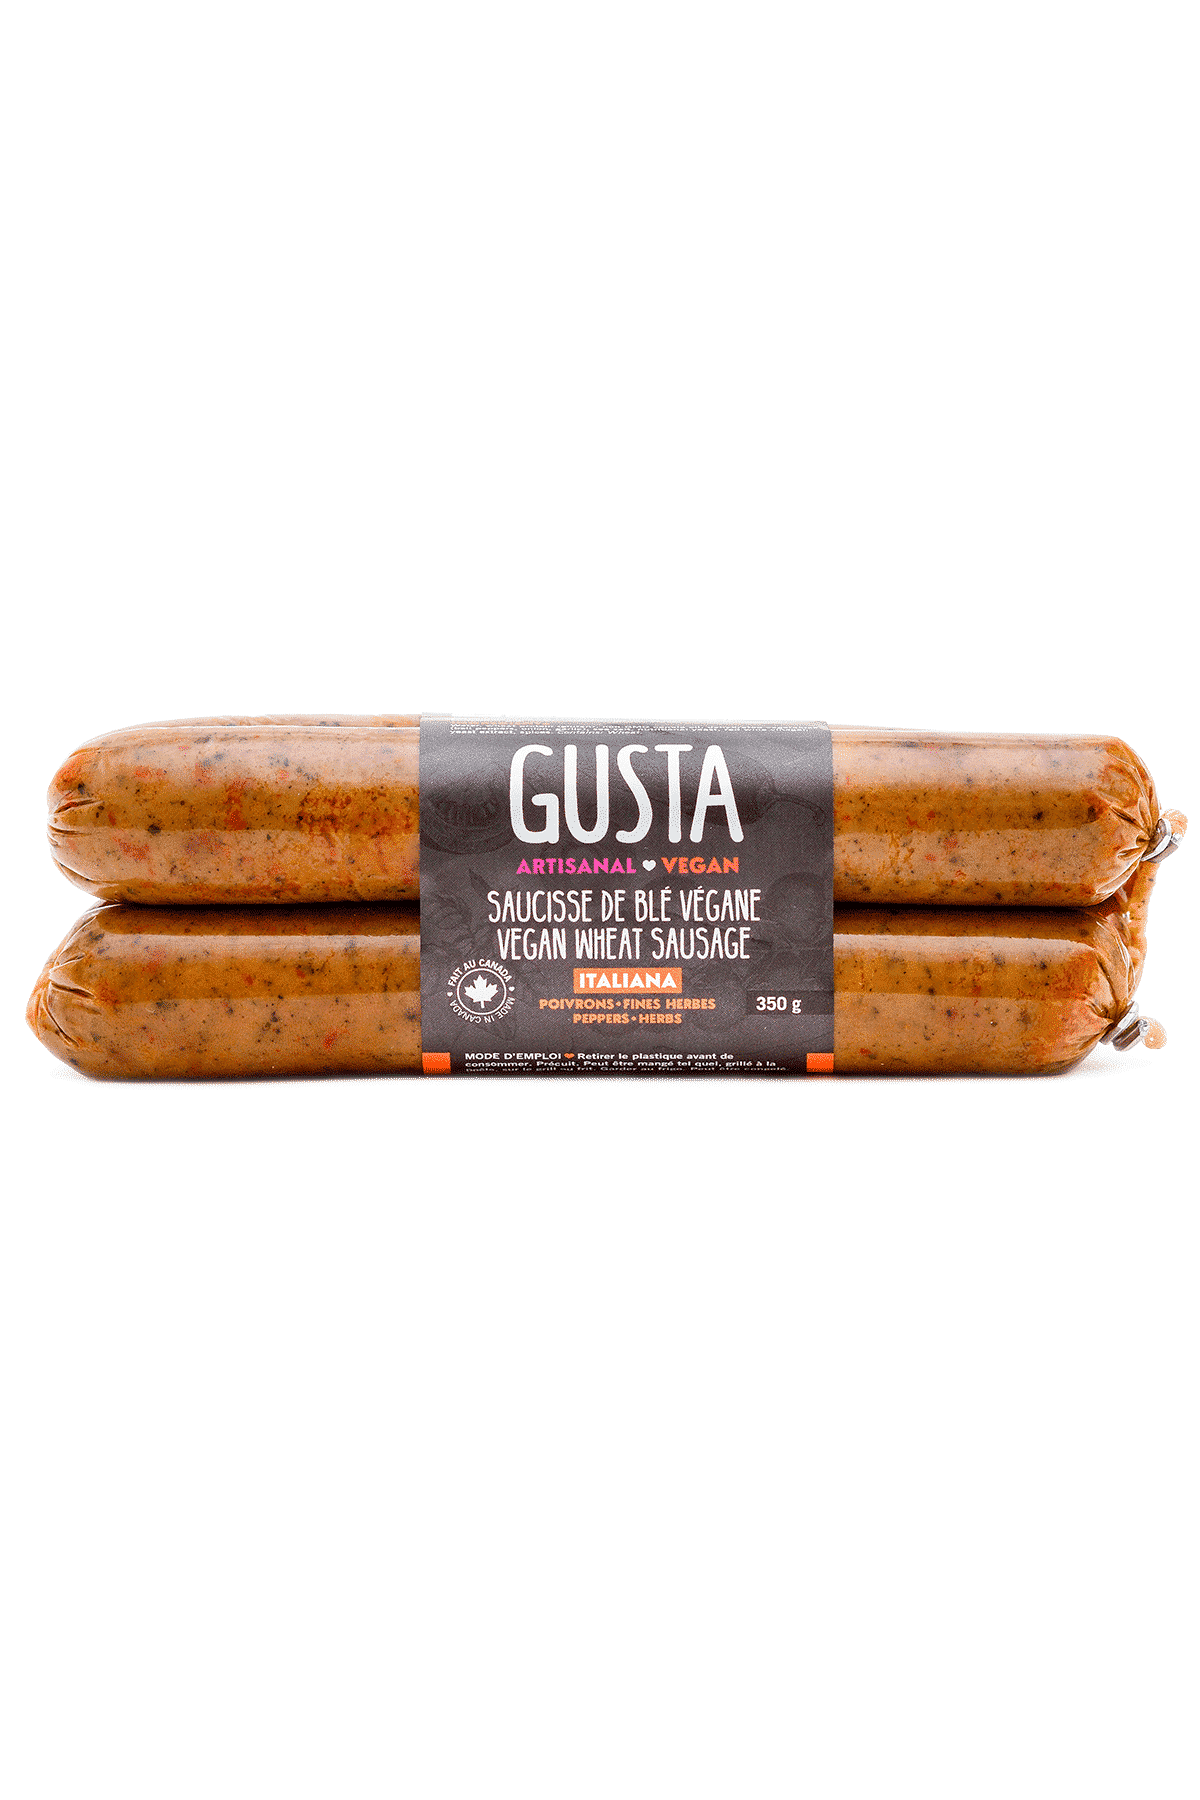 Gusta Vegan Wheat Sausage - Italiana 350g